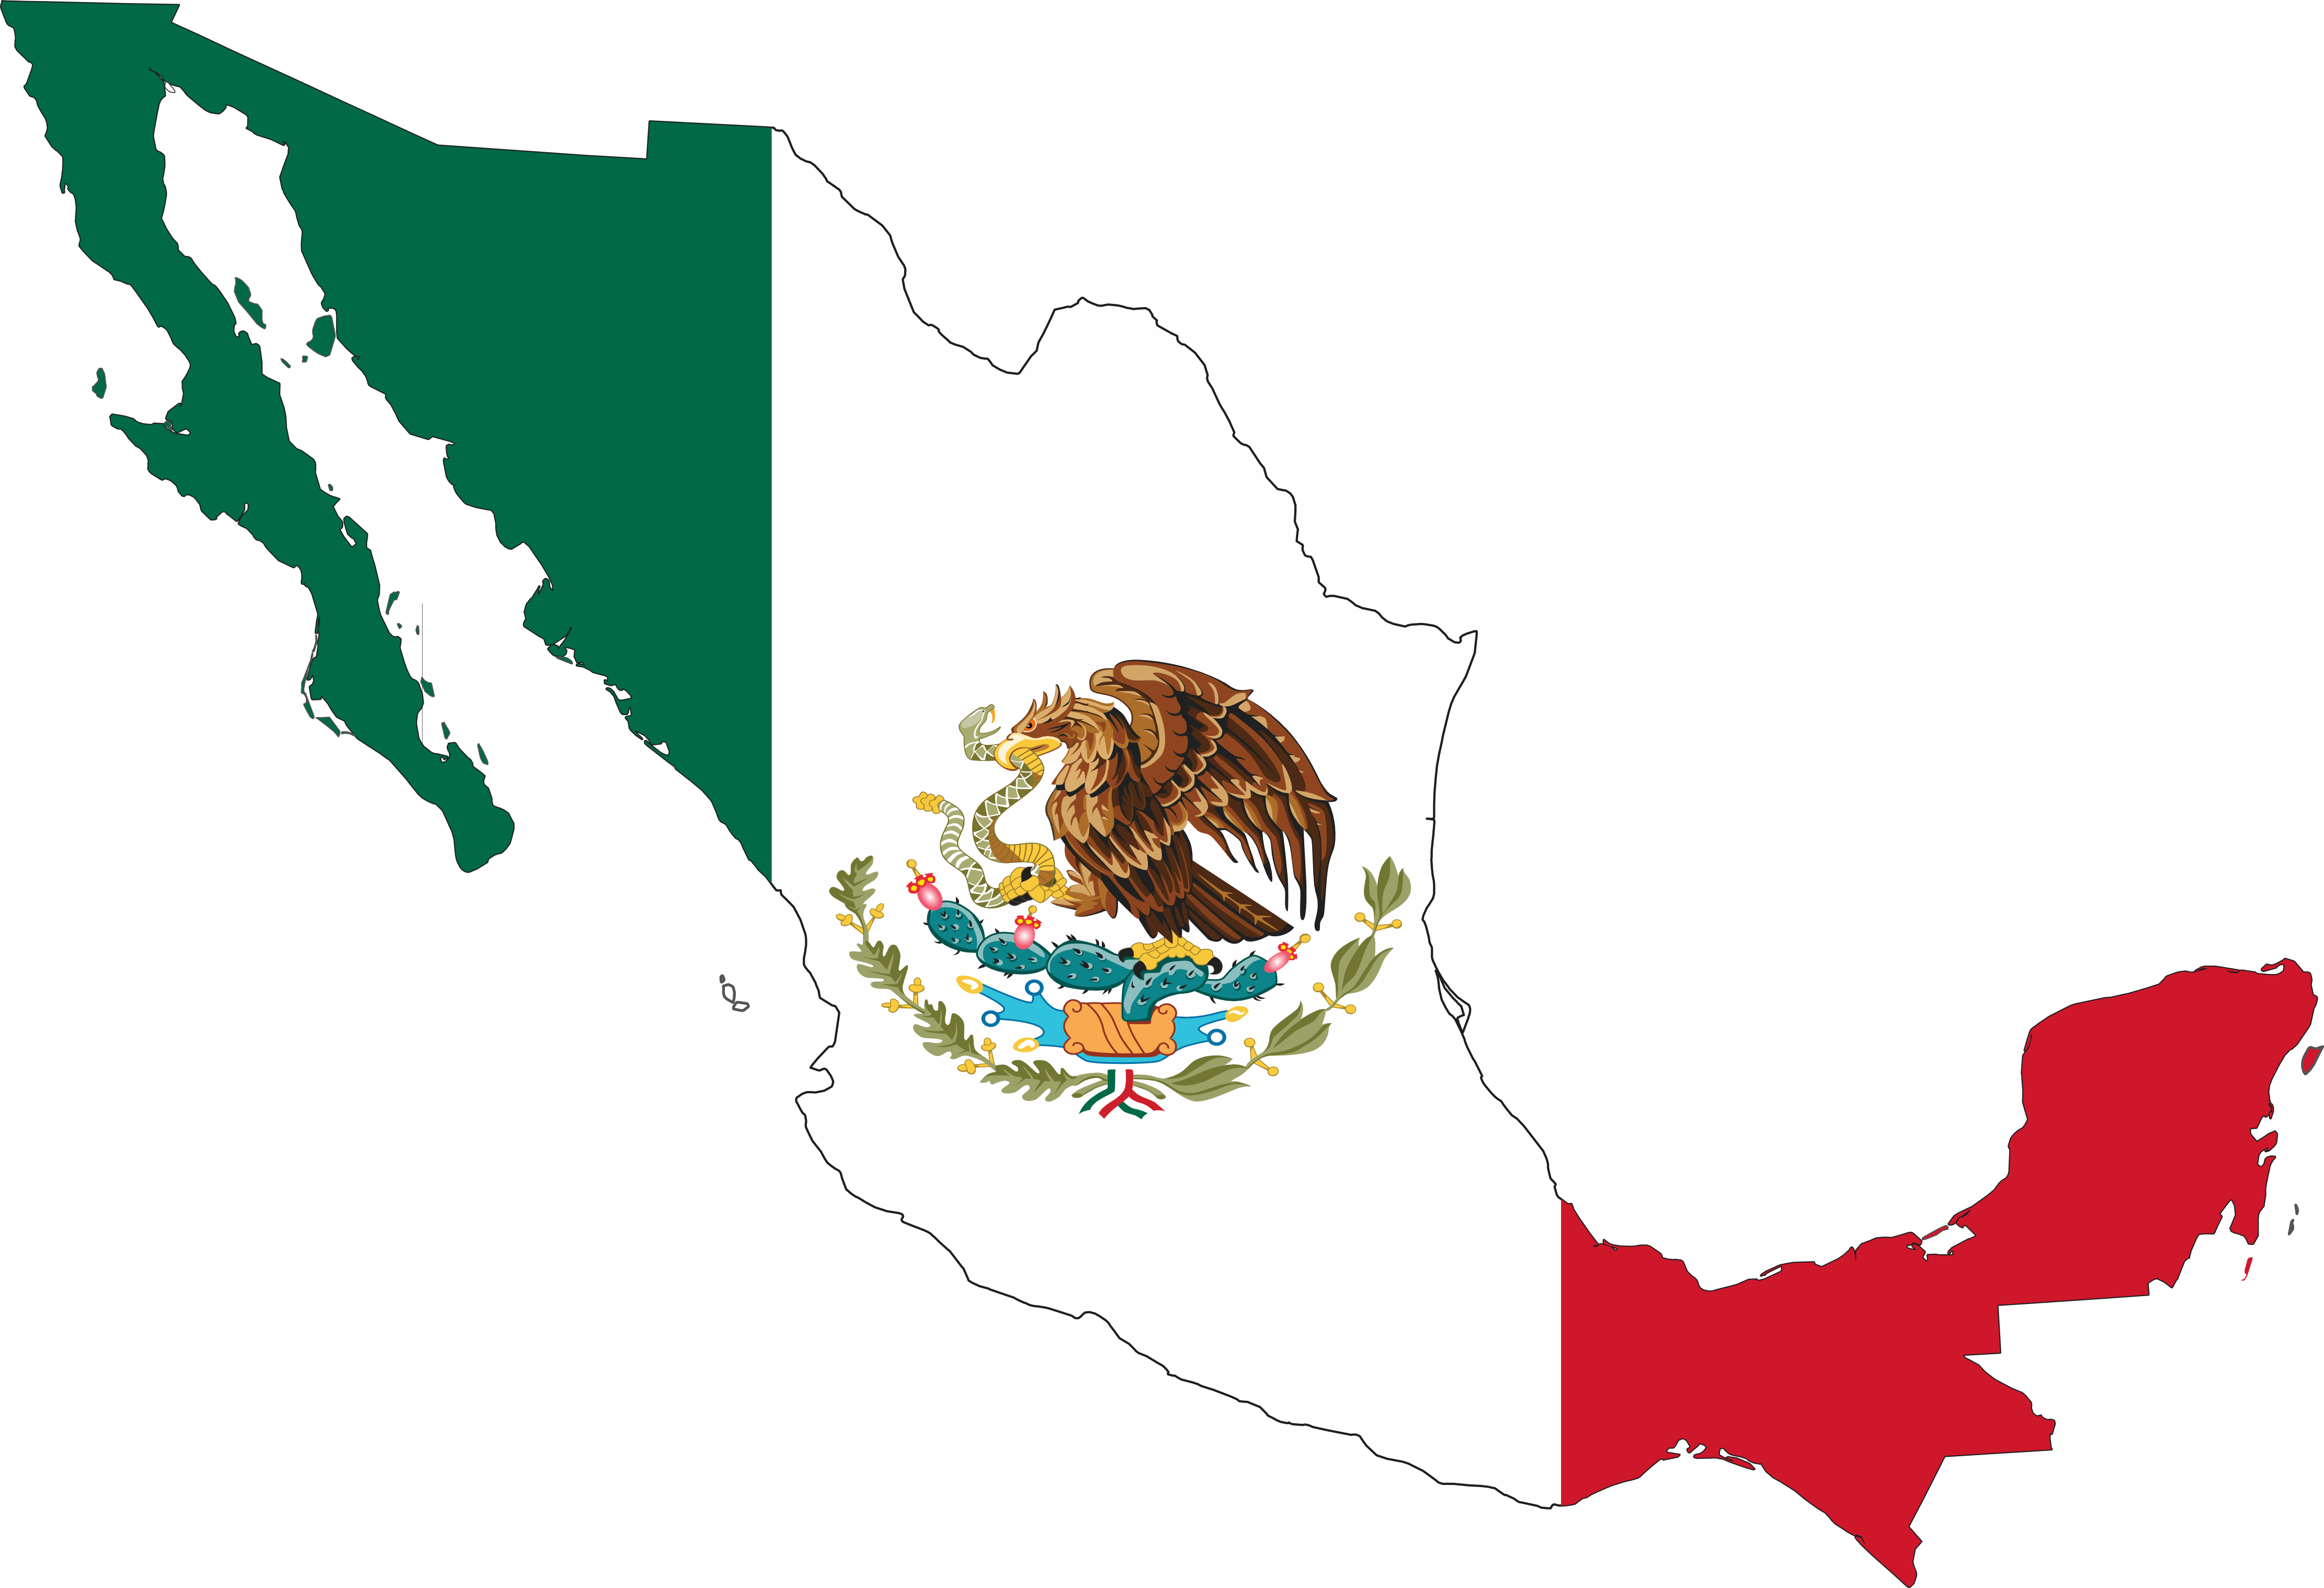 Mexican Flag Clip Art - Mexico Flag Clip Art